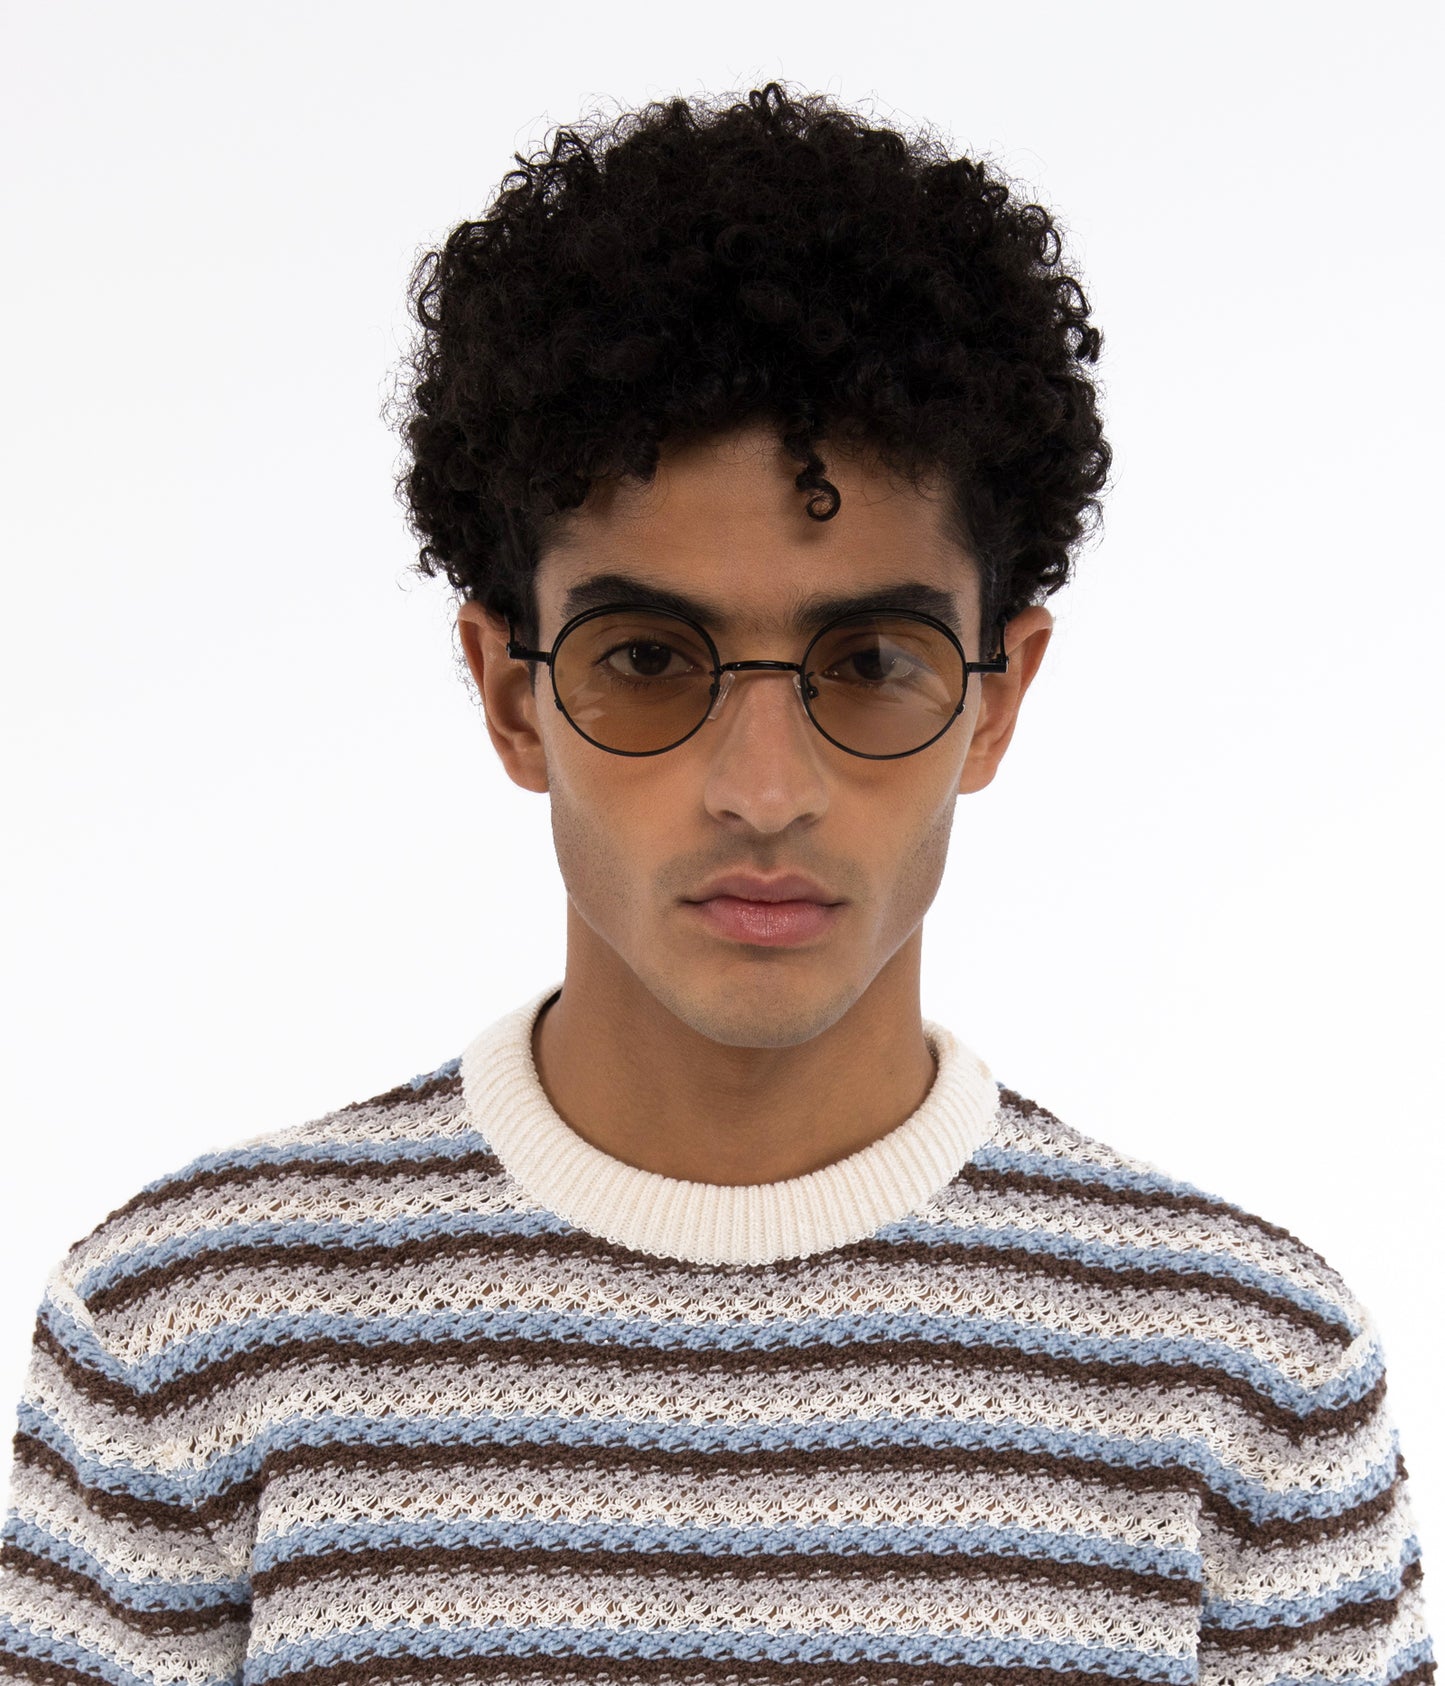 EDDON Small Round Sunglasses | Color: Grey - variant::grey